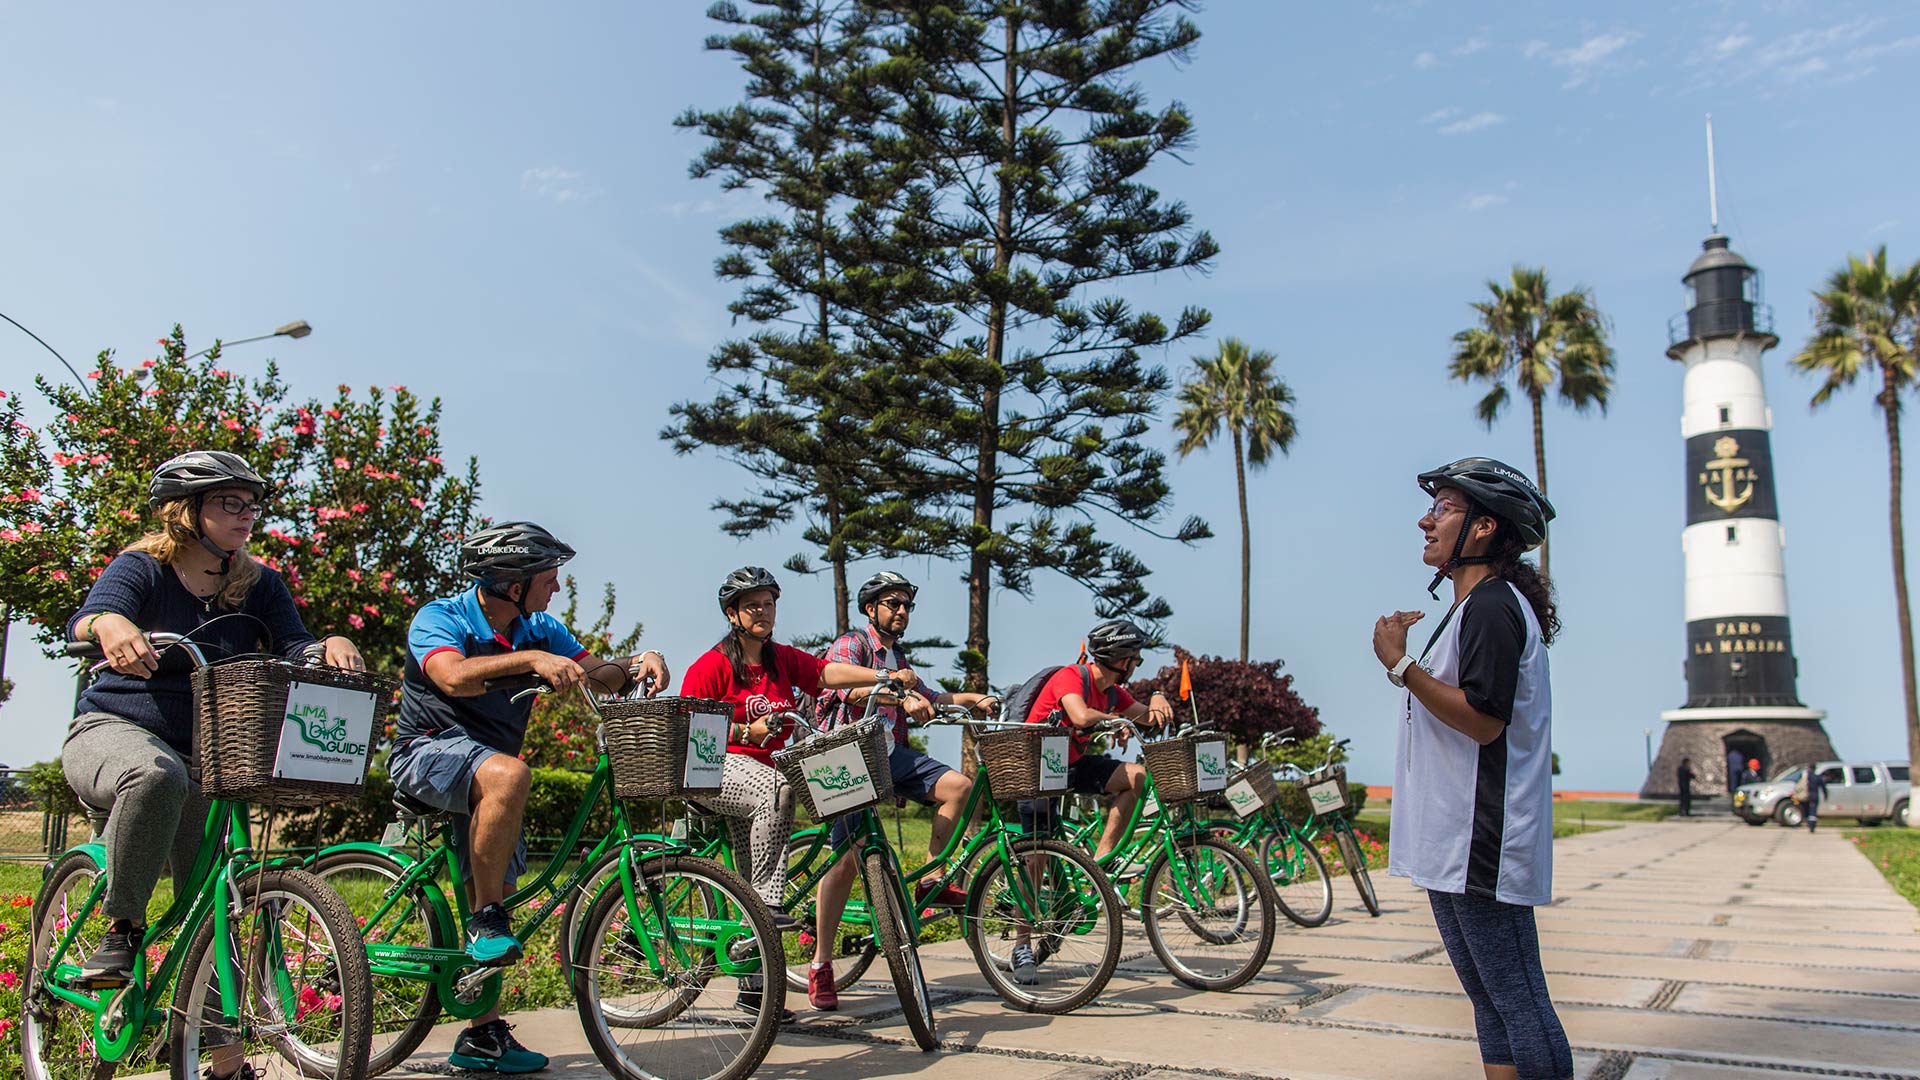 Biking lessons in the Miraflores pier